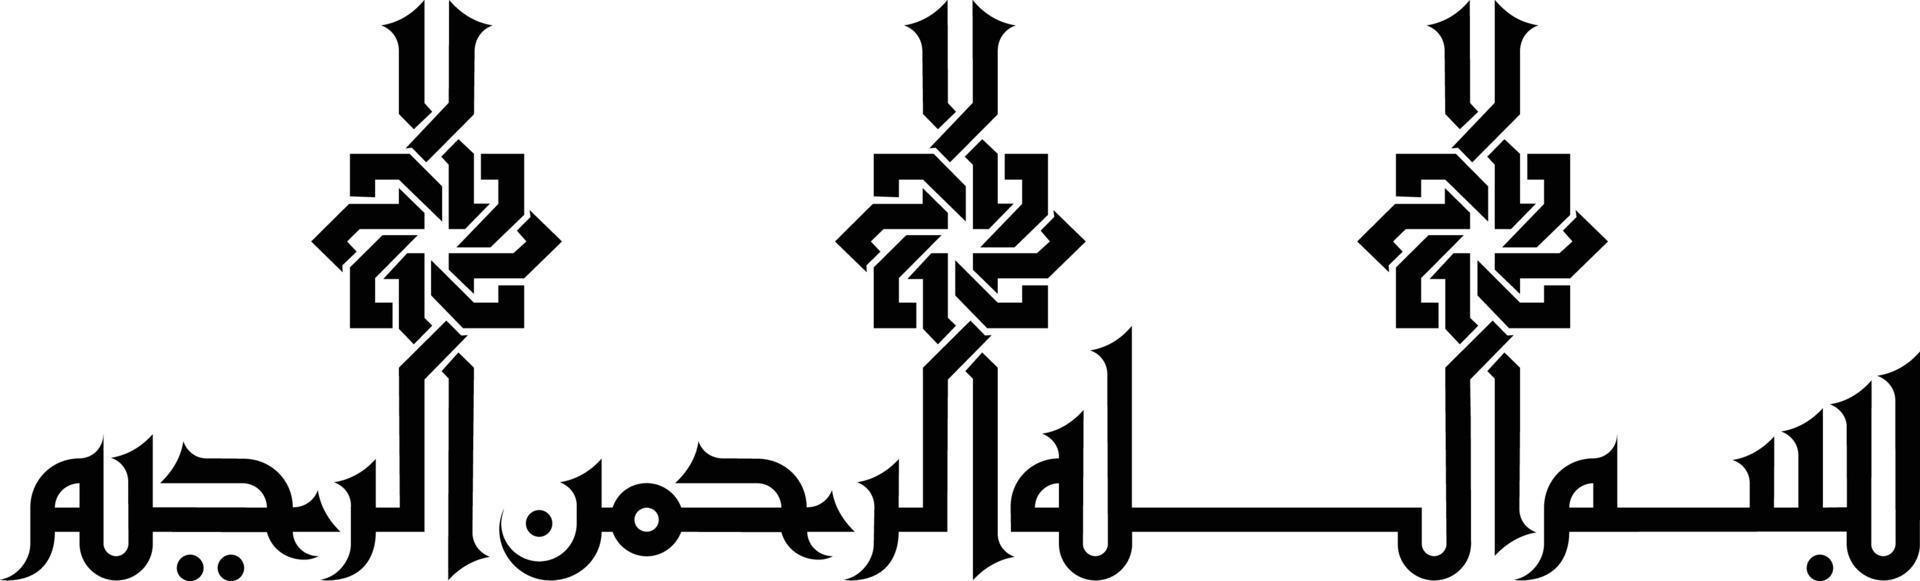 vetor livre de caligrafia islâmica de título de bismila